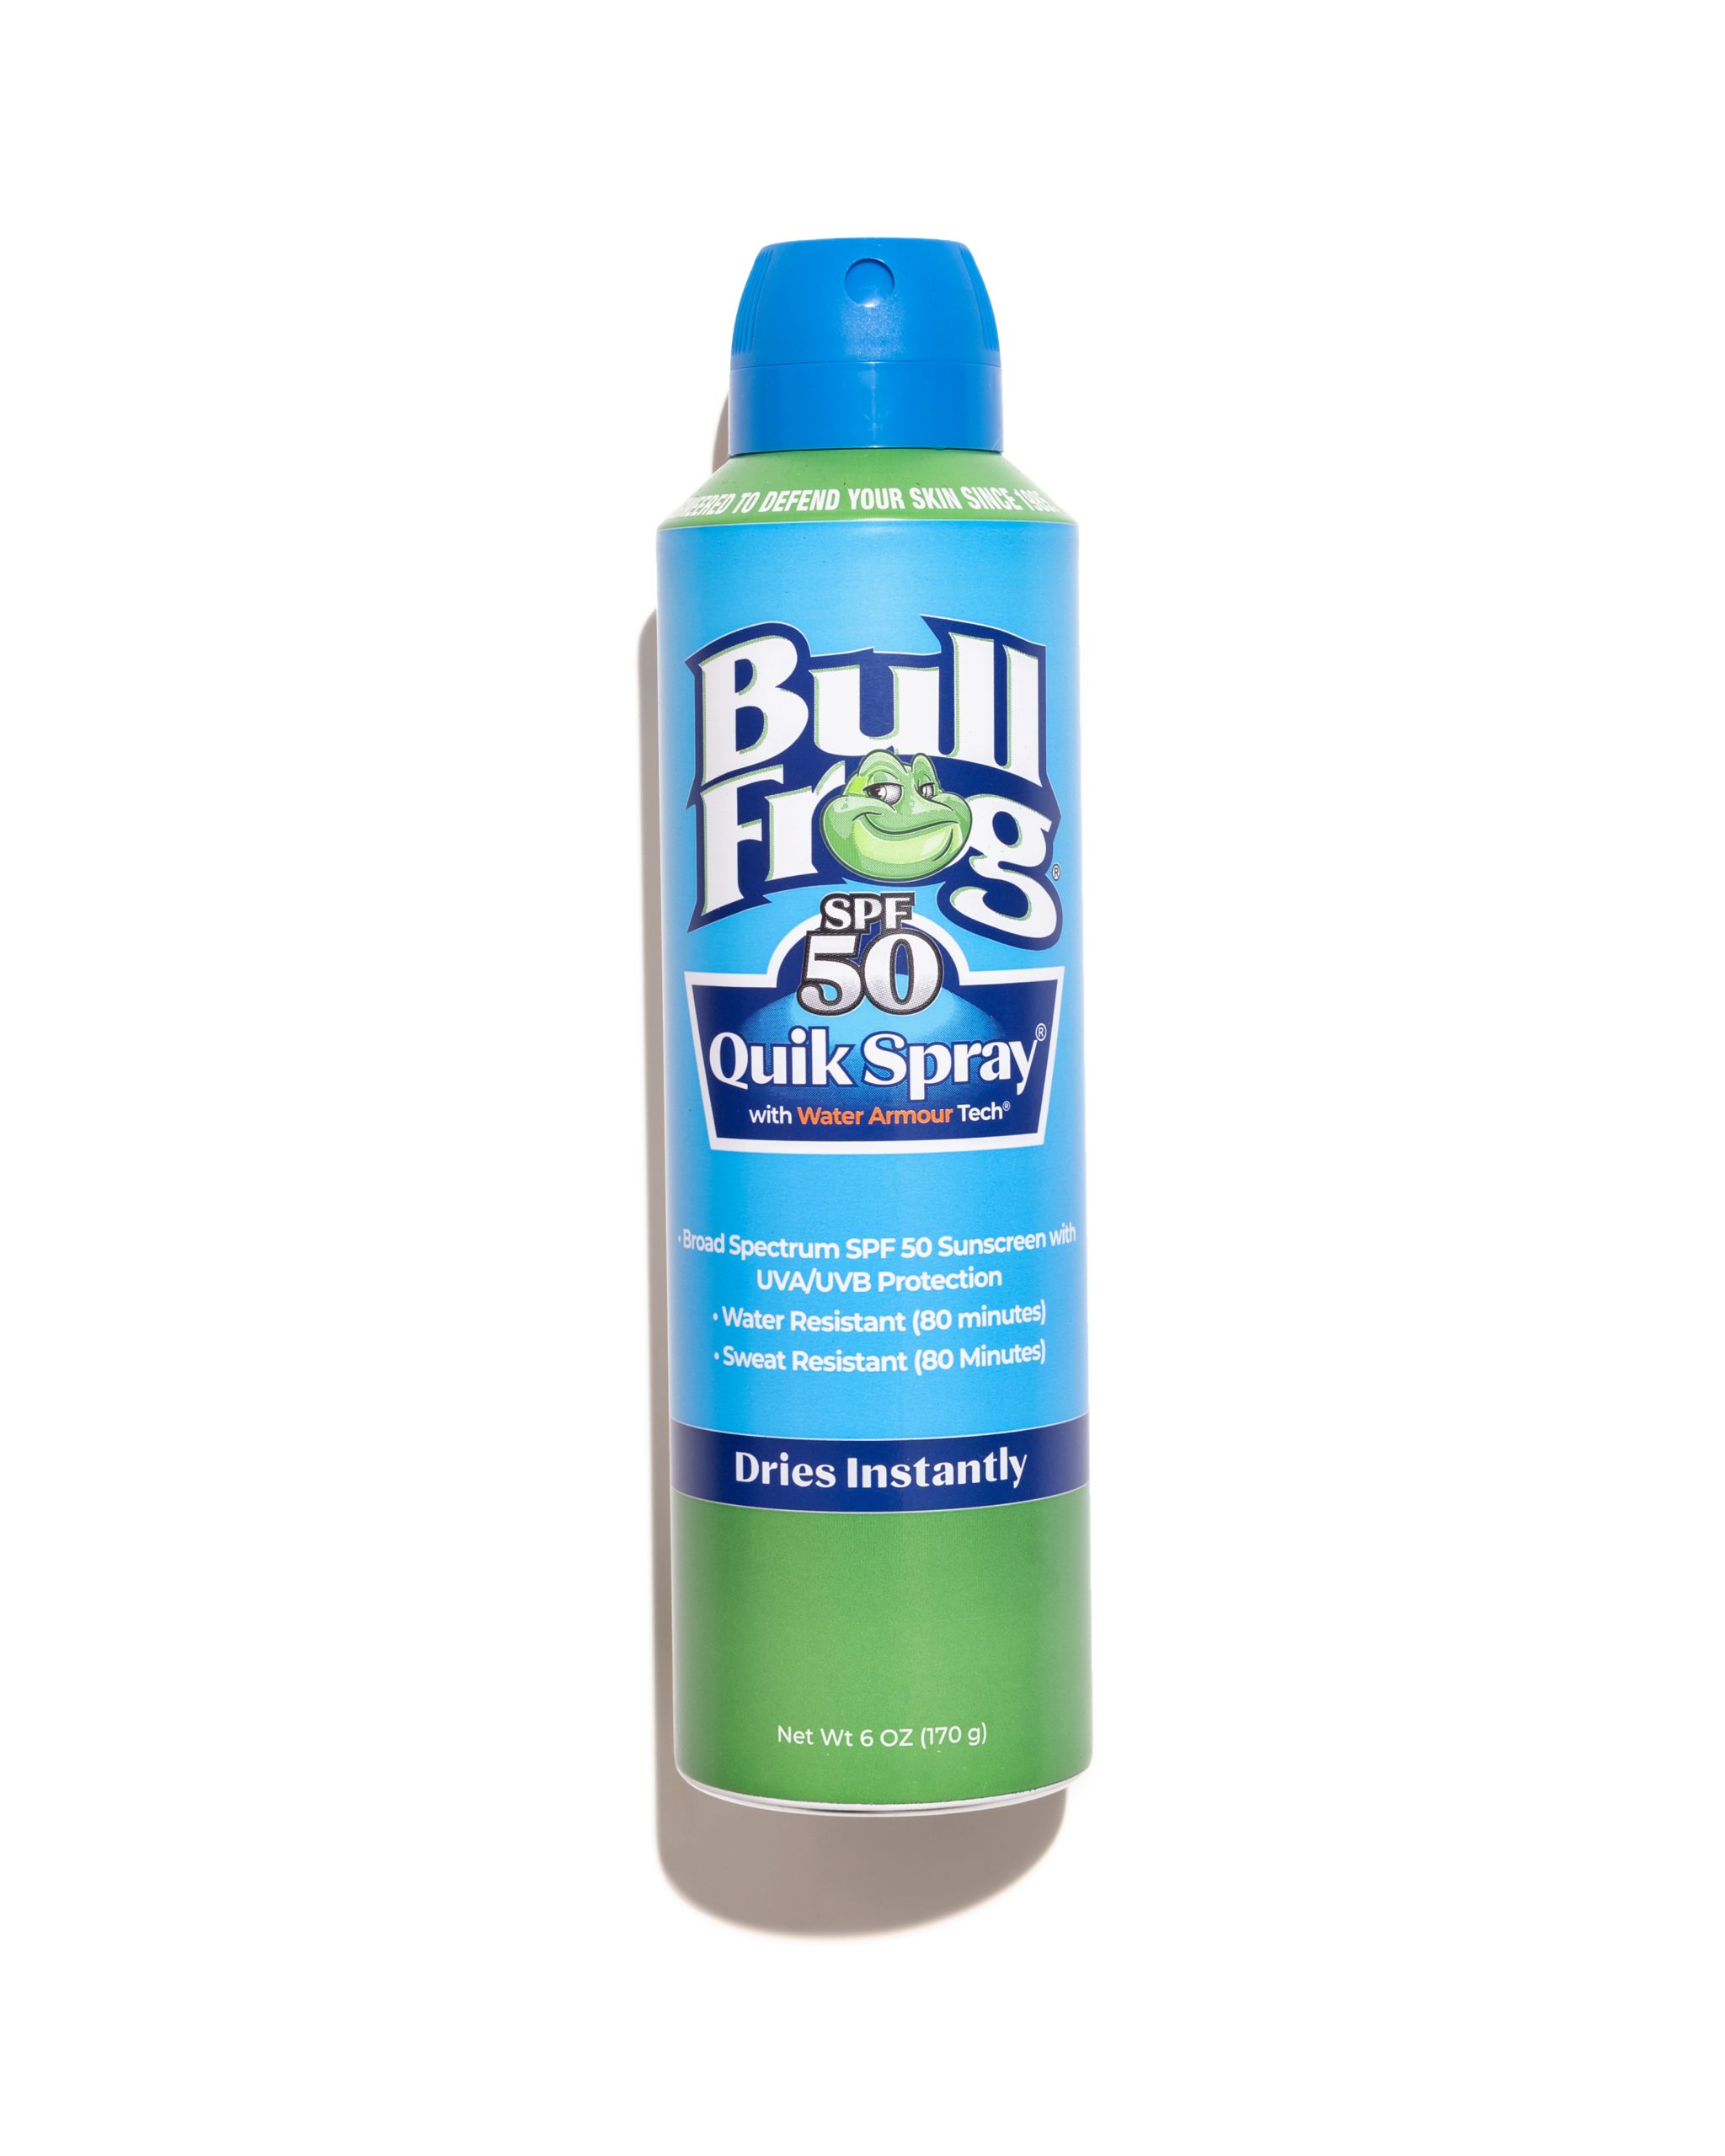 BULLFROG QUIK SPRAY SUNSCREEN SPF 50 - Insect Repellent